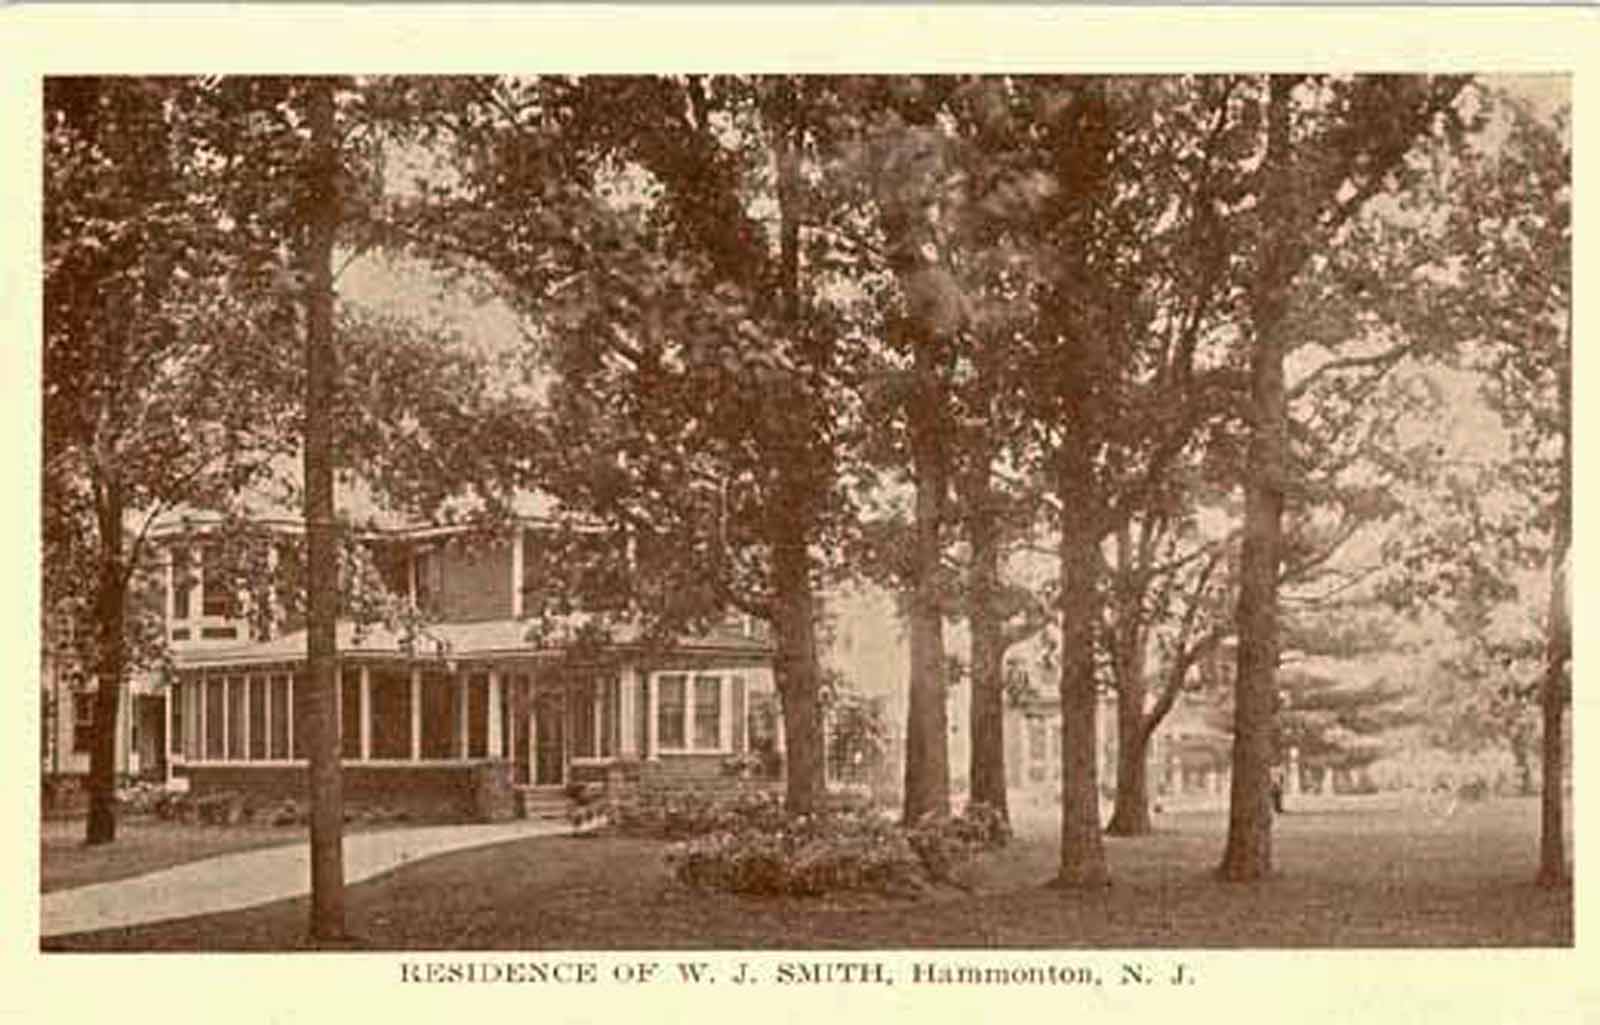 Hammonton - The W J Smith residence